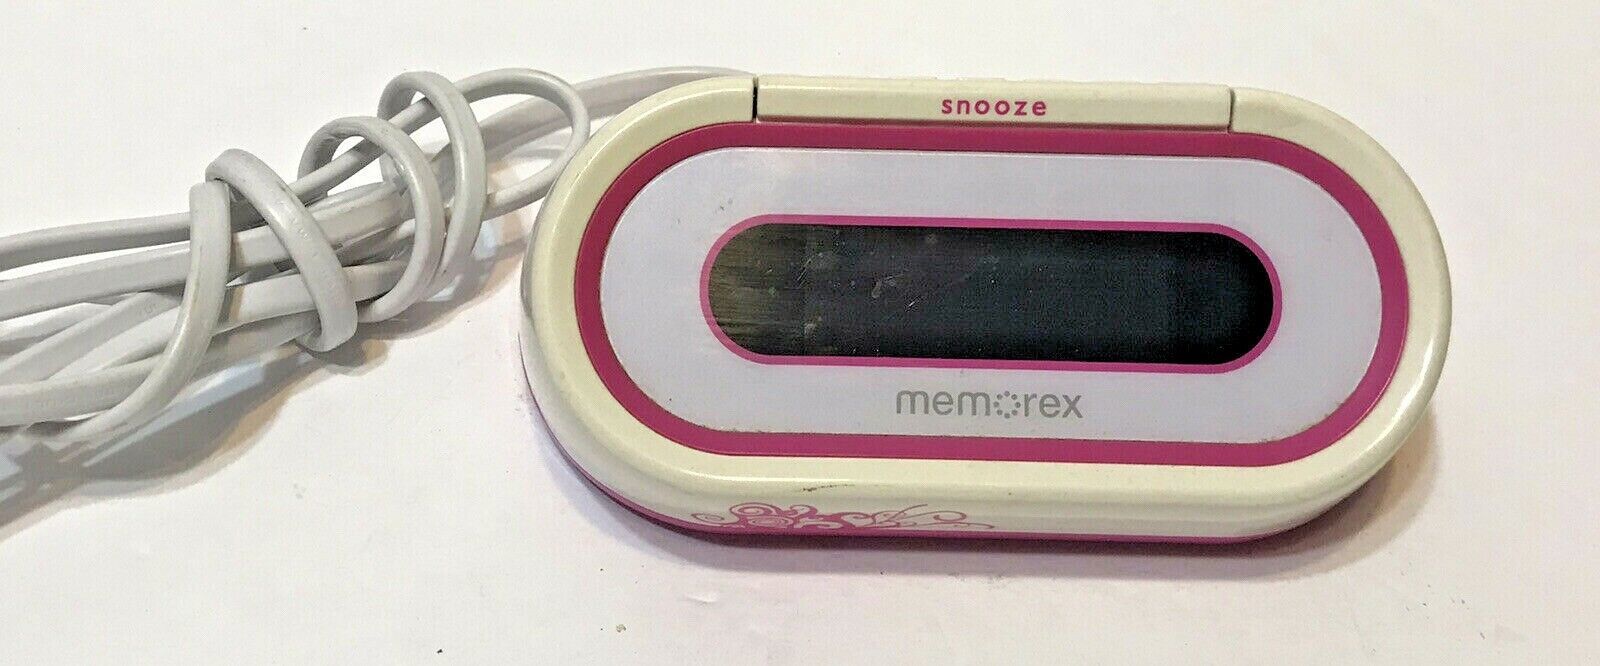 Memorex AM/FM Alarm Clock Radio Pink & White W207-PNK Tested Used - $17.58